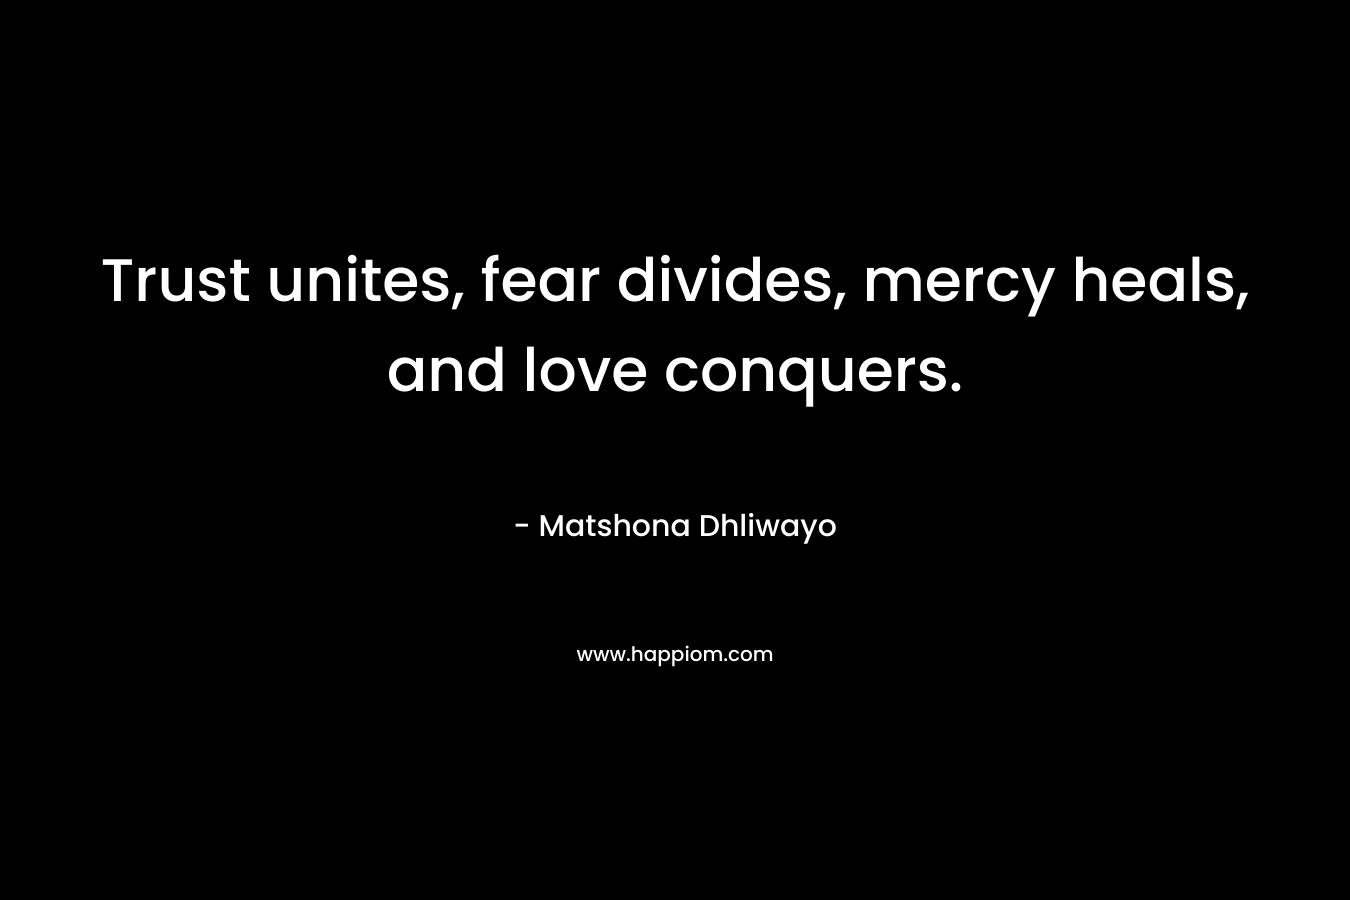 Trust unites, fear divides, mercy heals, and love conquers.